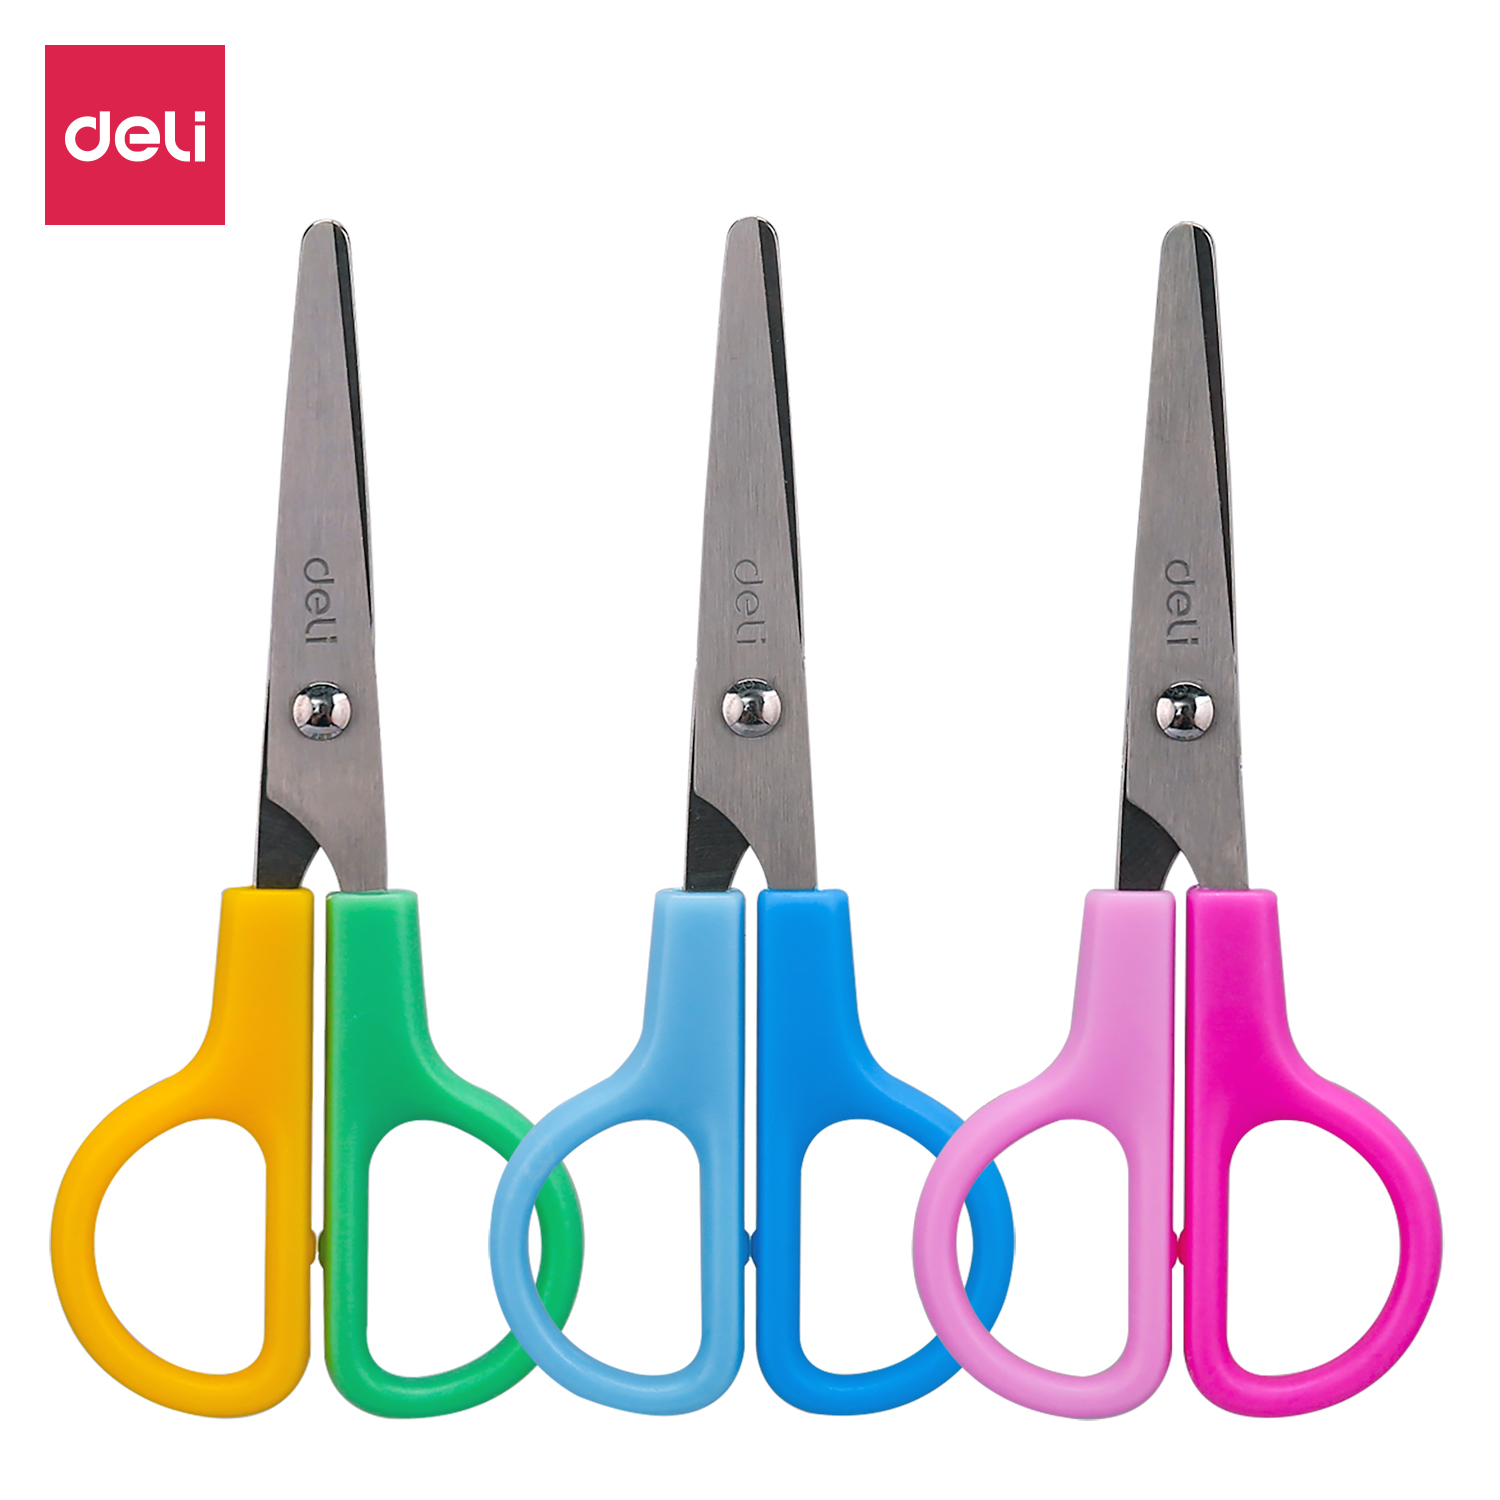 Deli-ED60601 School Scissors